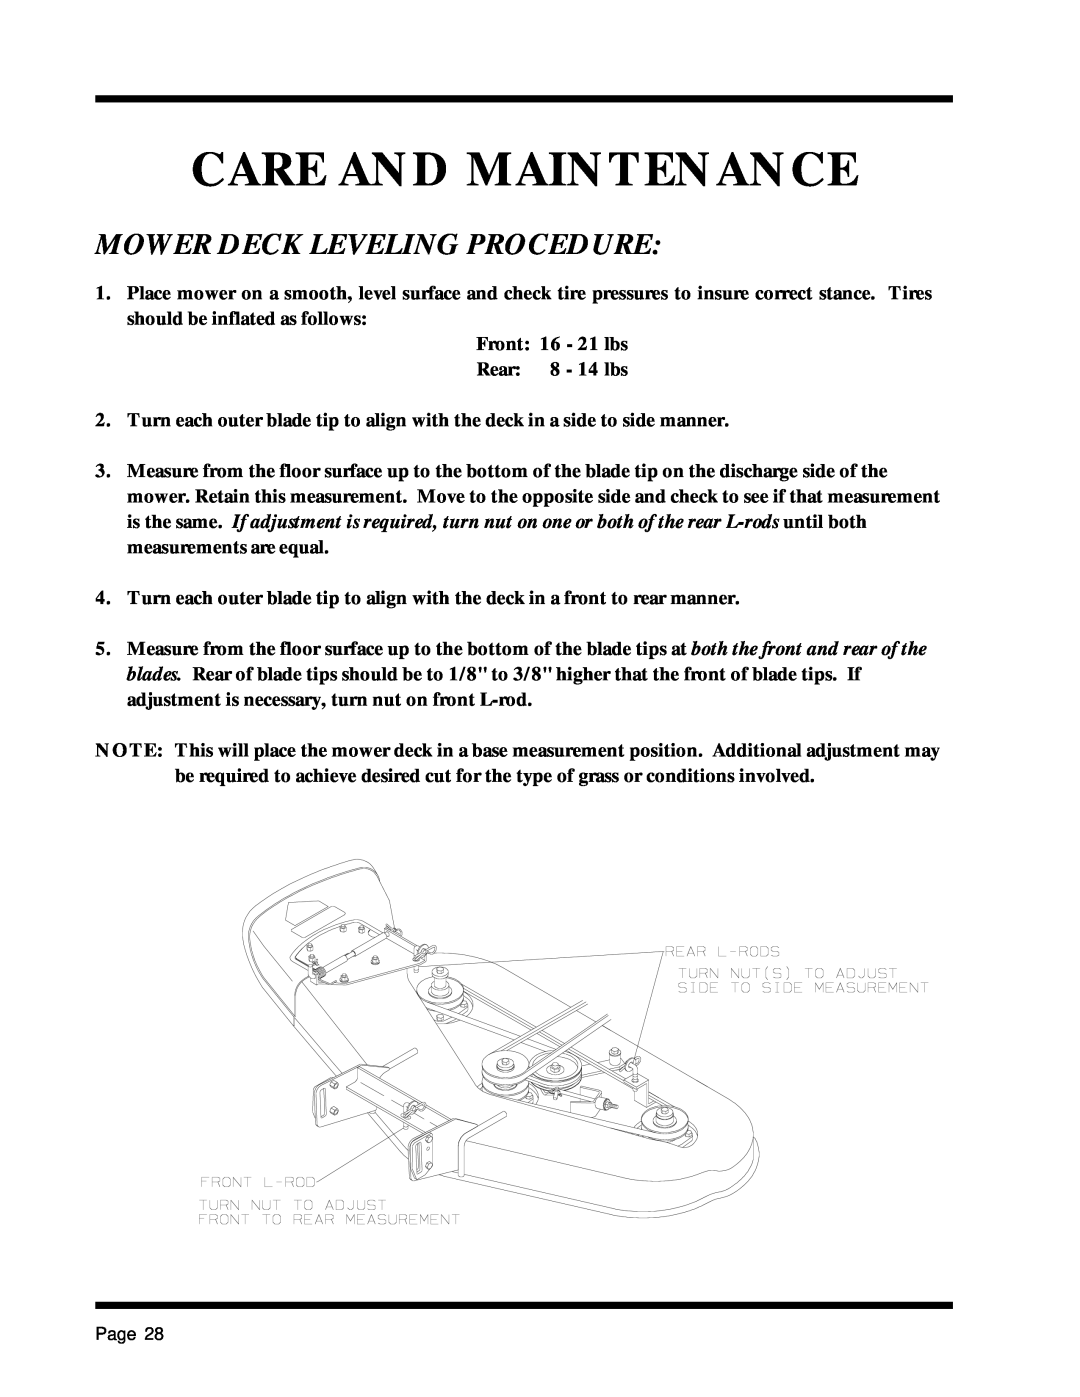 Dixon 1857-0599 manual Mower Deck Leveling Procedure, Care And Maintenance 